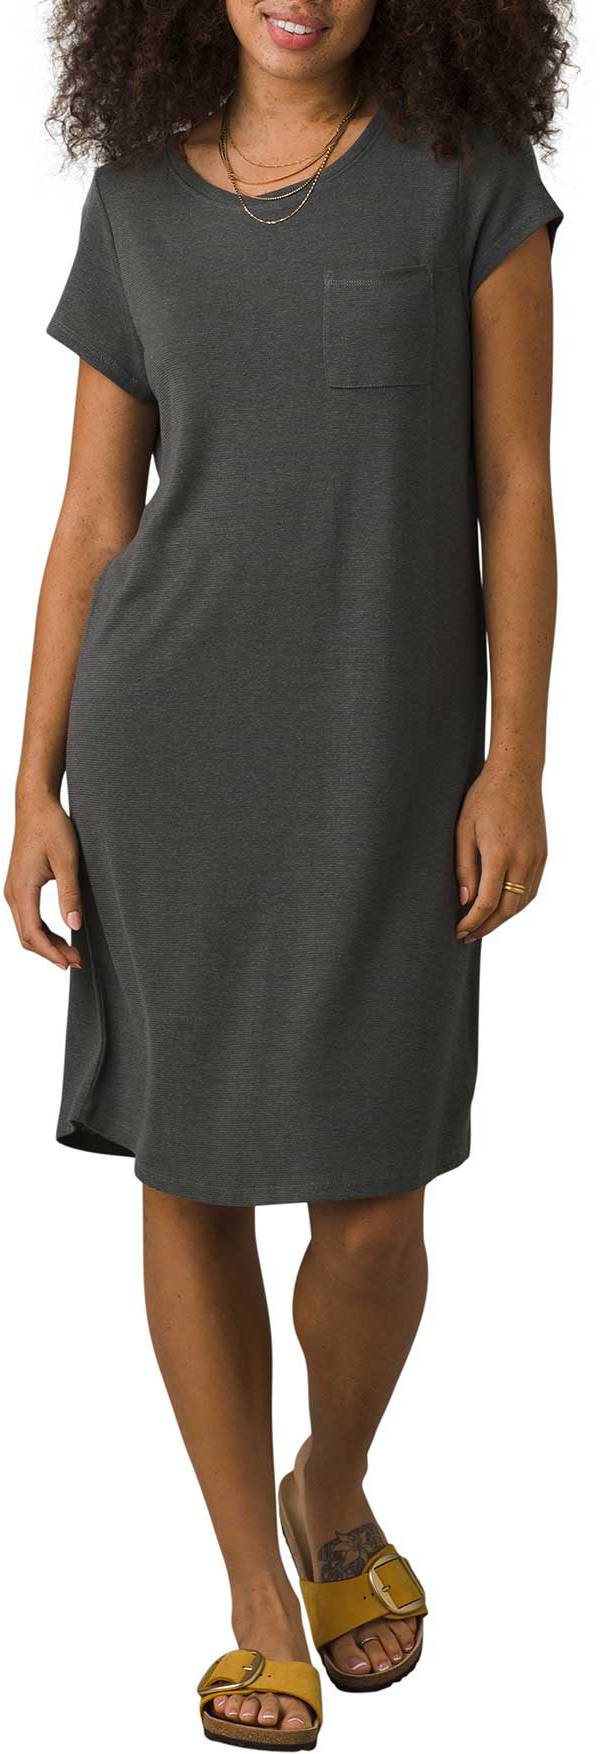 prAna Women's Elana Cozy Up Dress product image